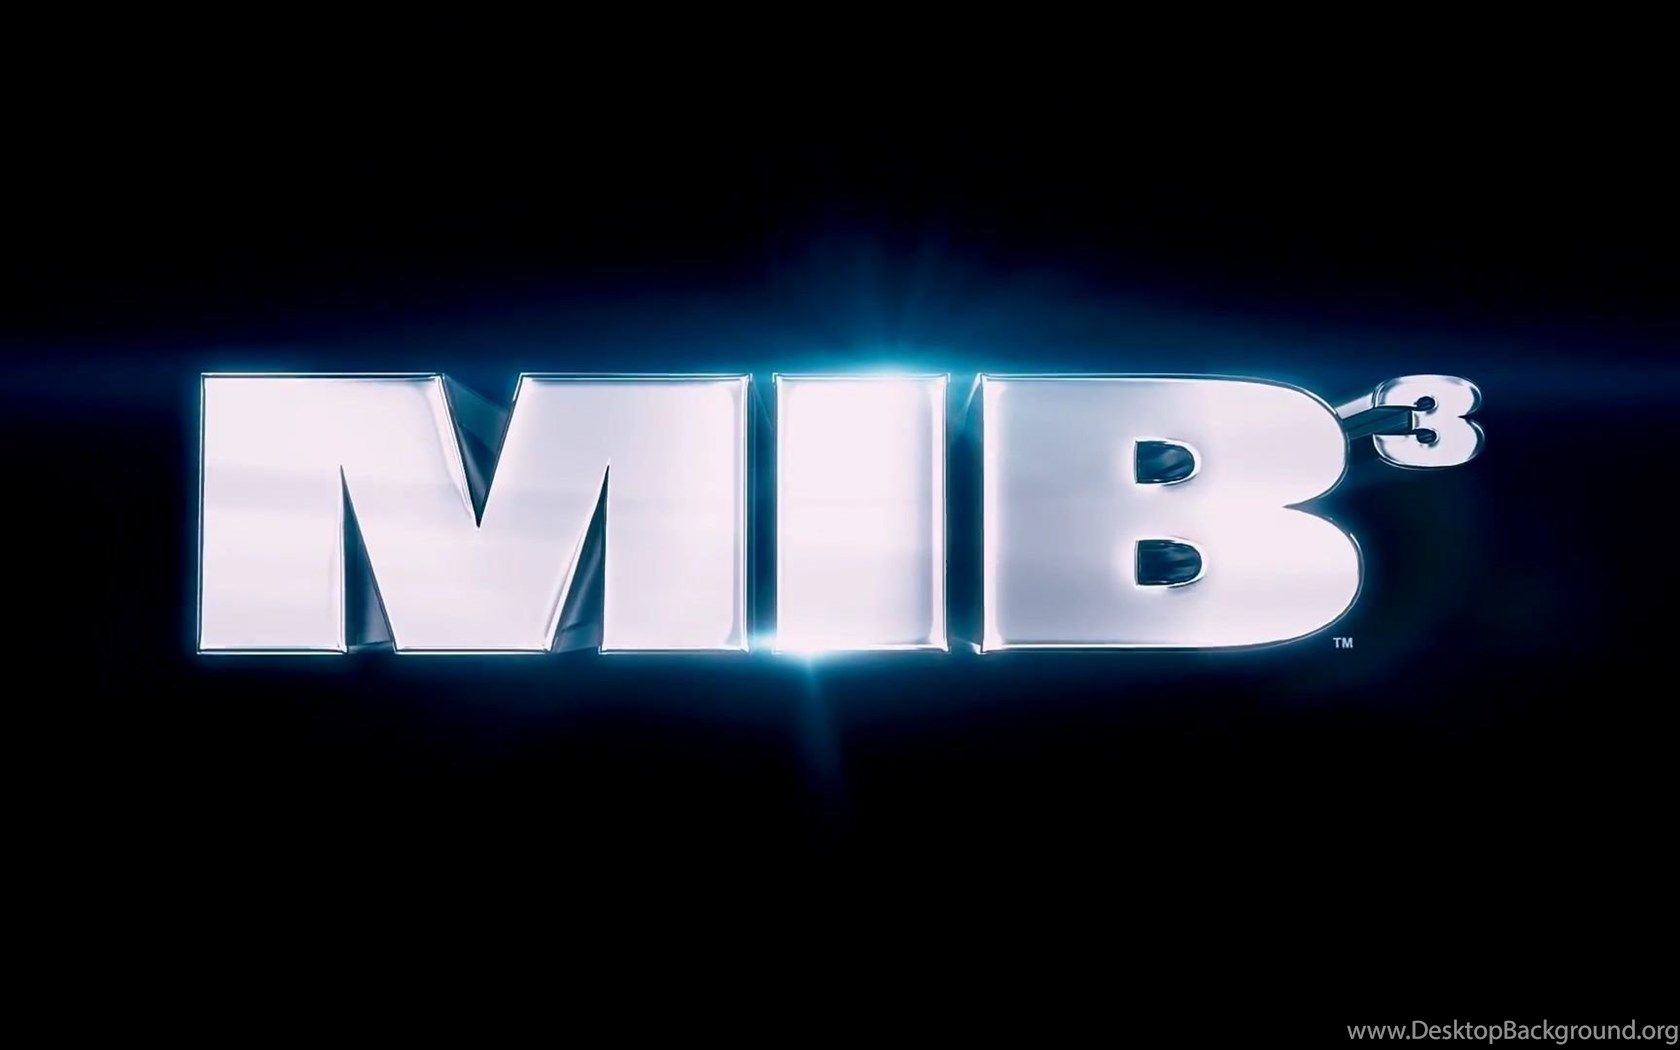 MIB 3 Free Wallpaper In High Quality Men In Black Movie Background Desktop Background